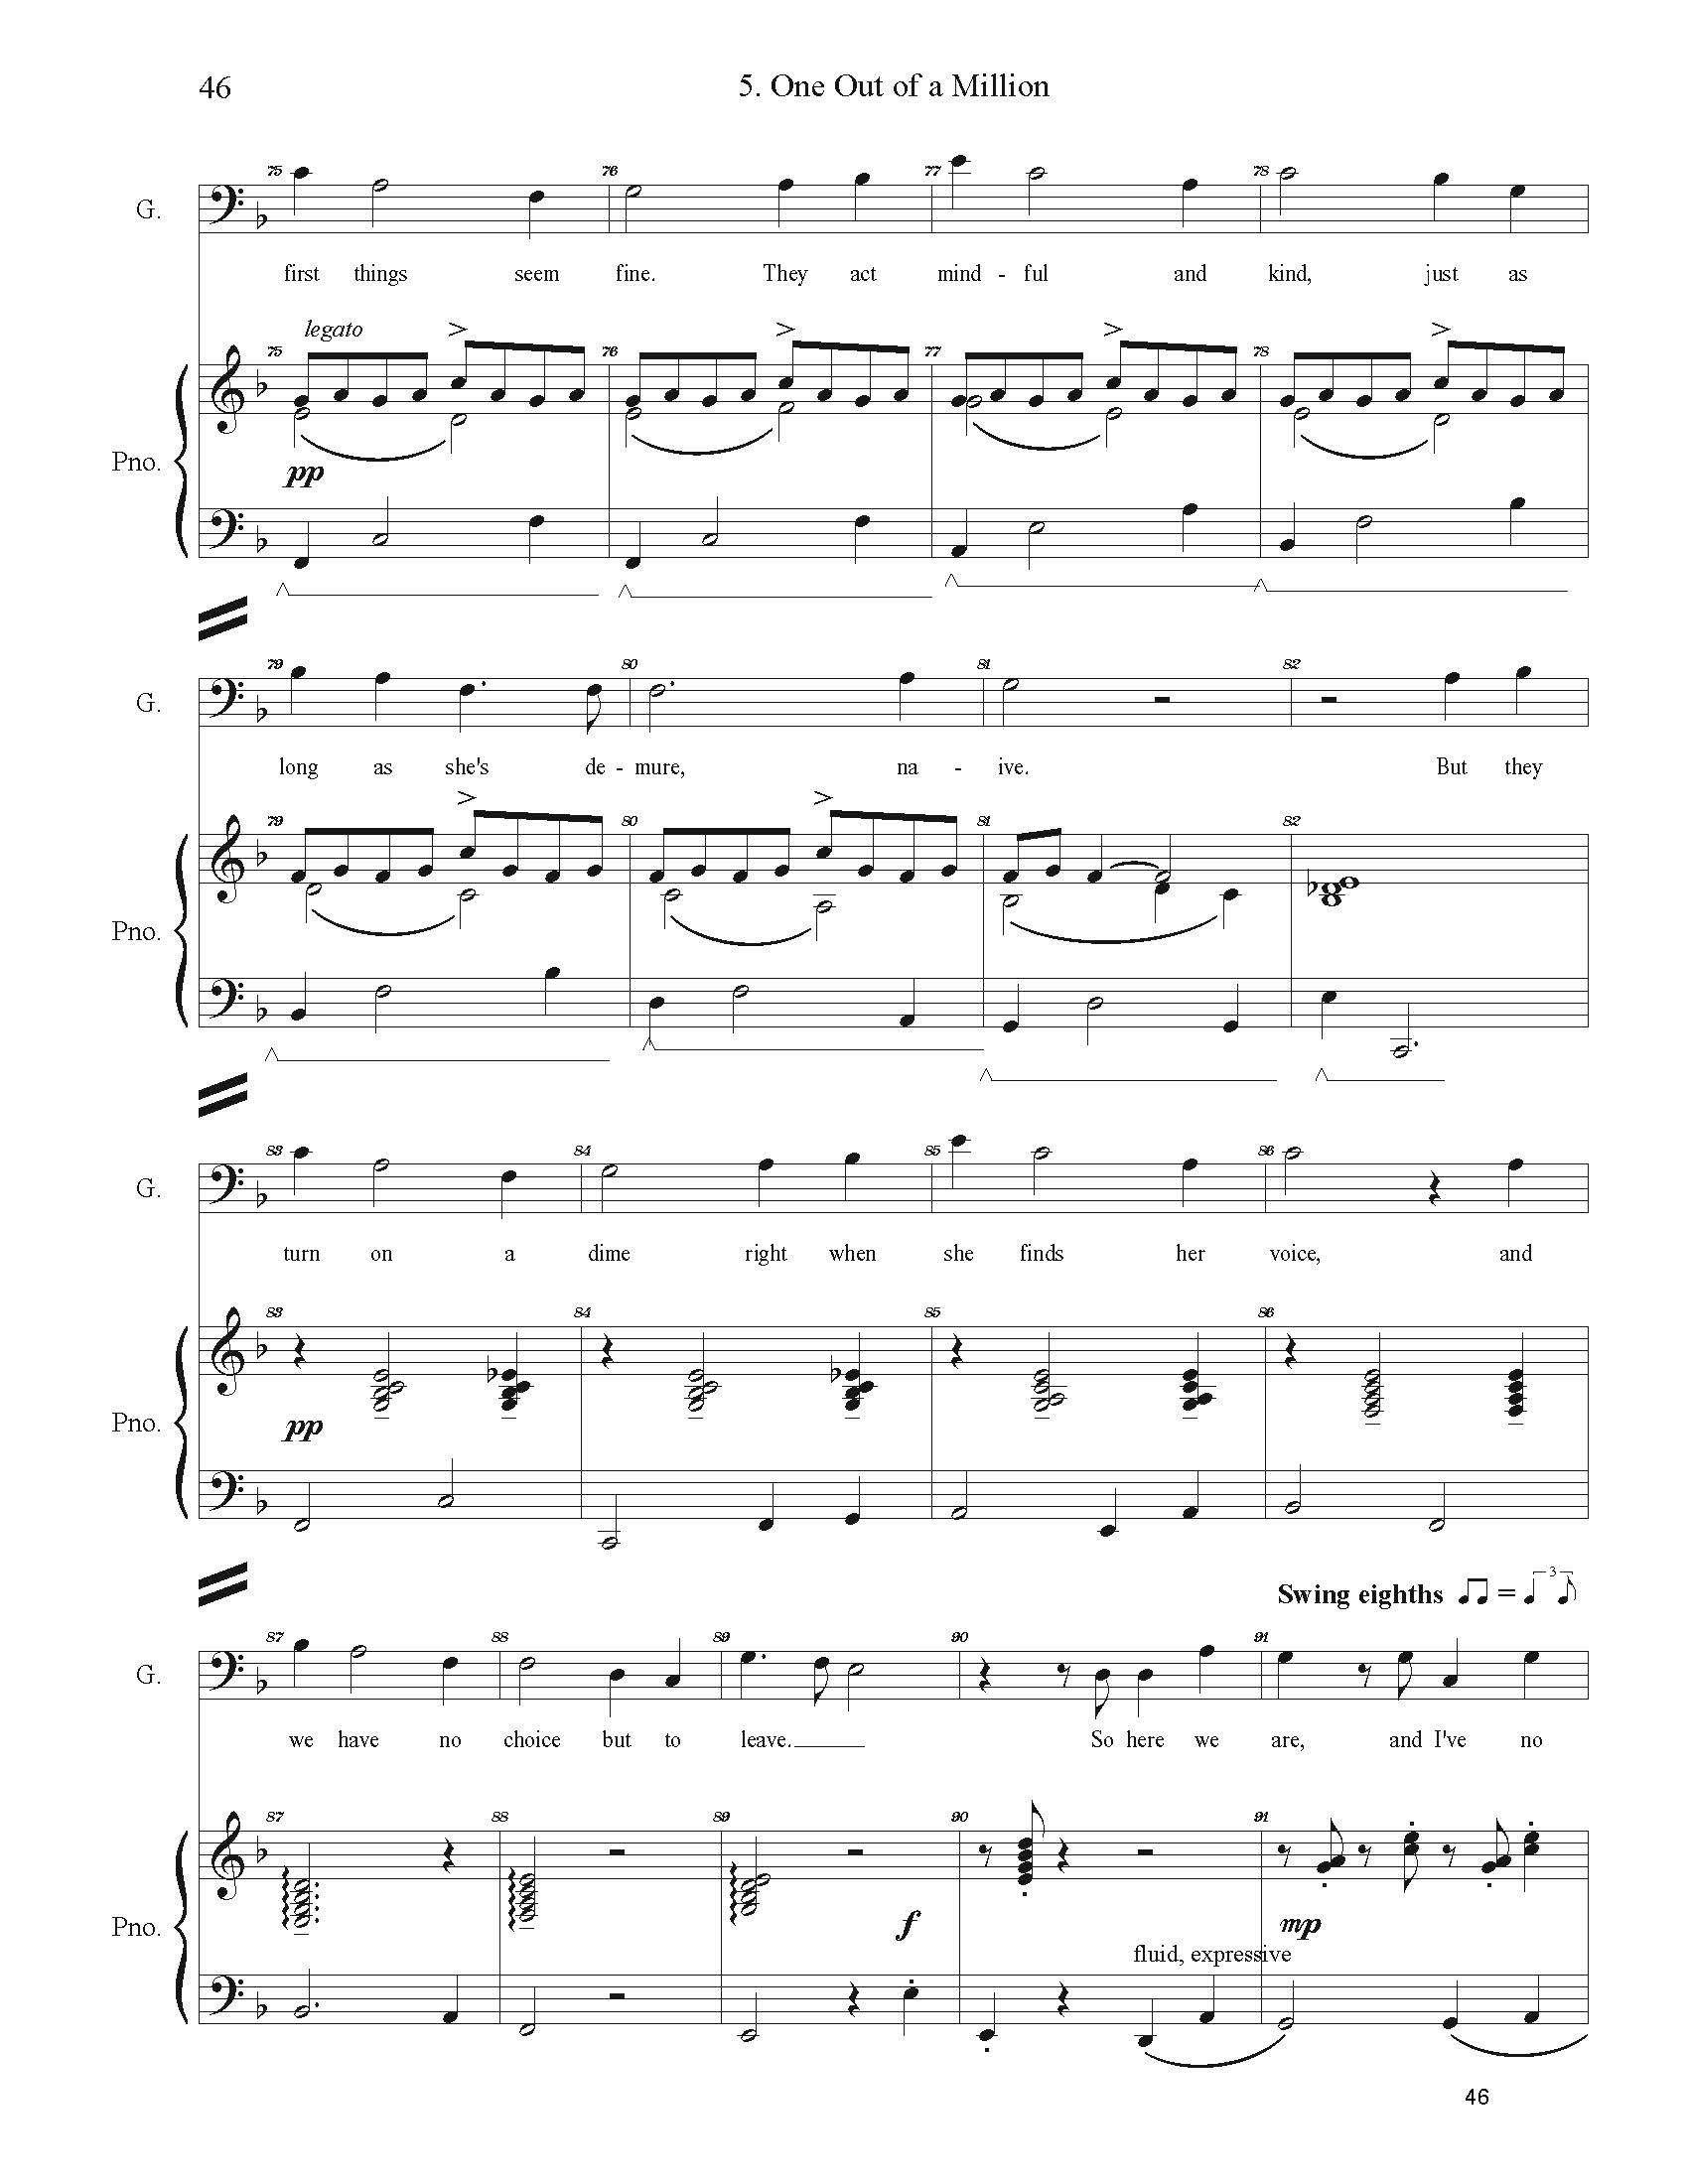 FULL PIANO VOCAL SCORE DRAFT 1 - Score_Page_046.jpg